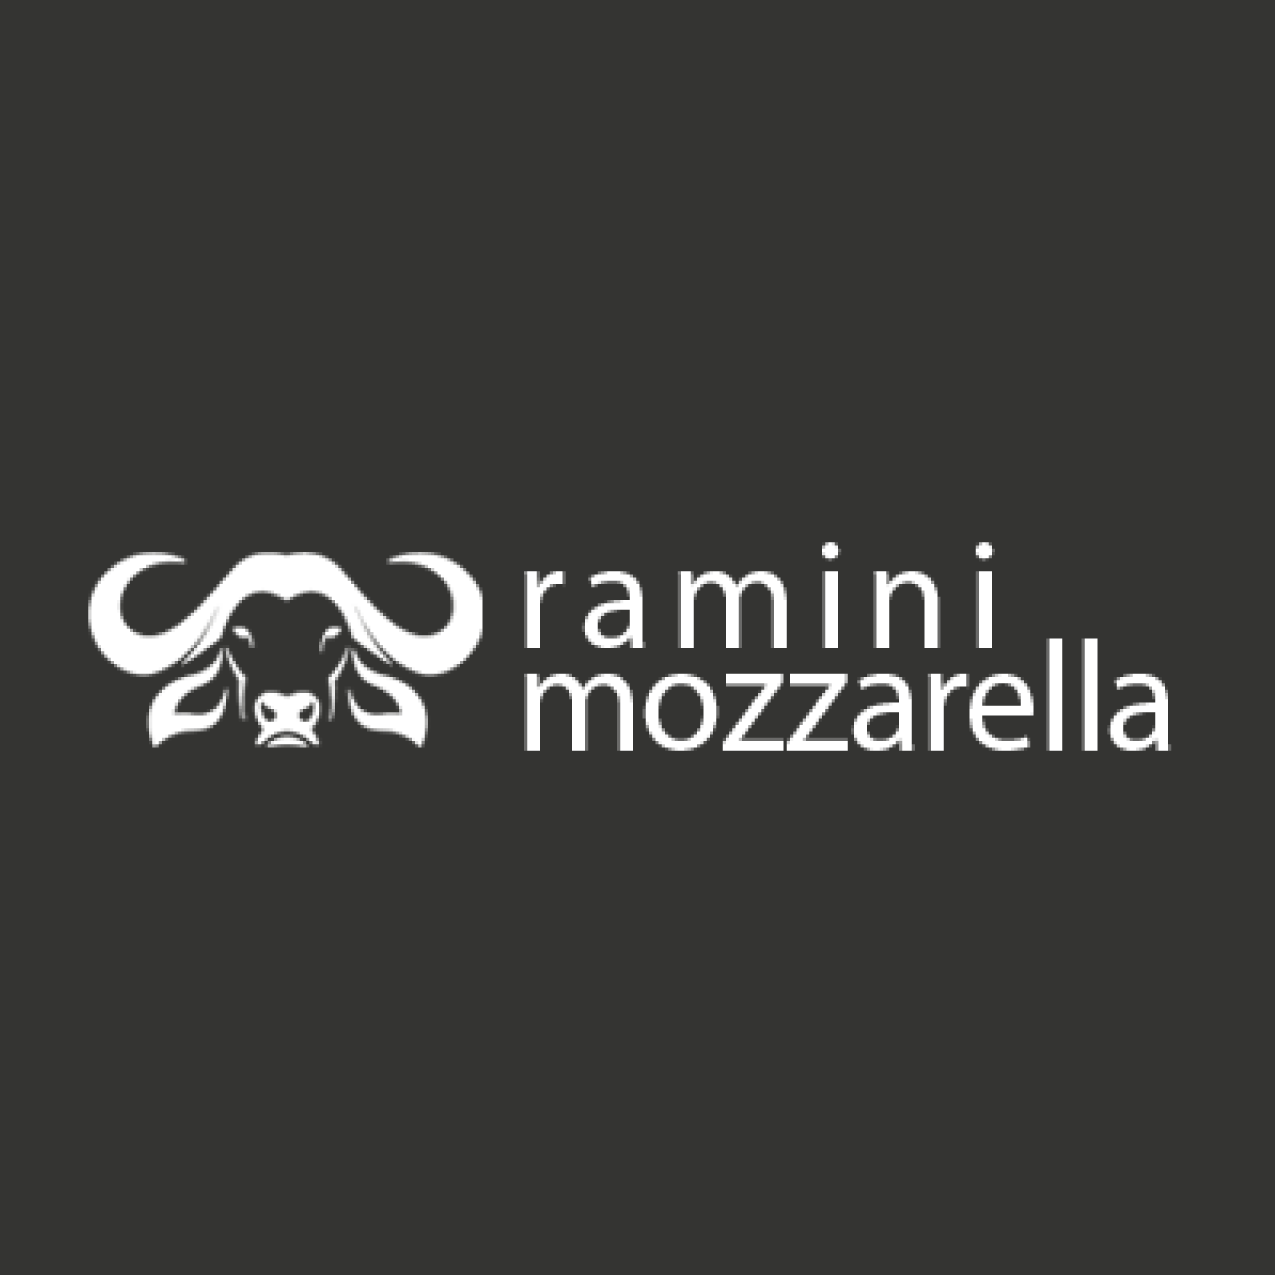 Ramini Mozzarella Logo